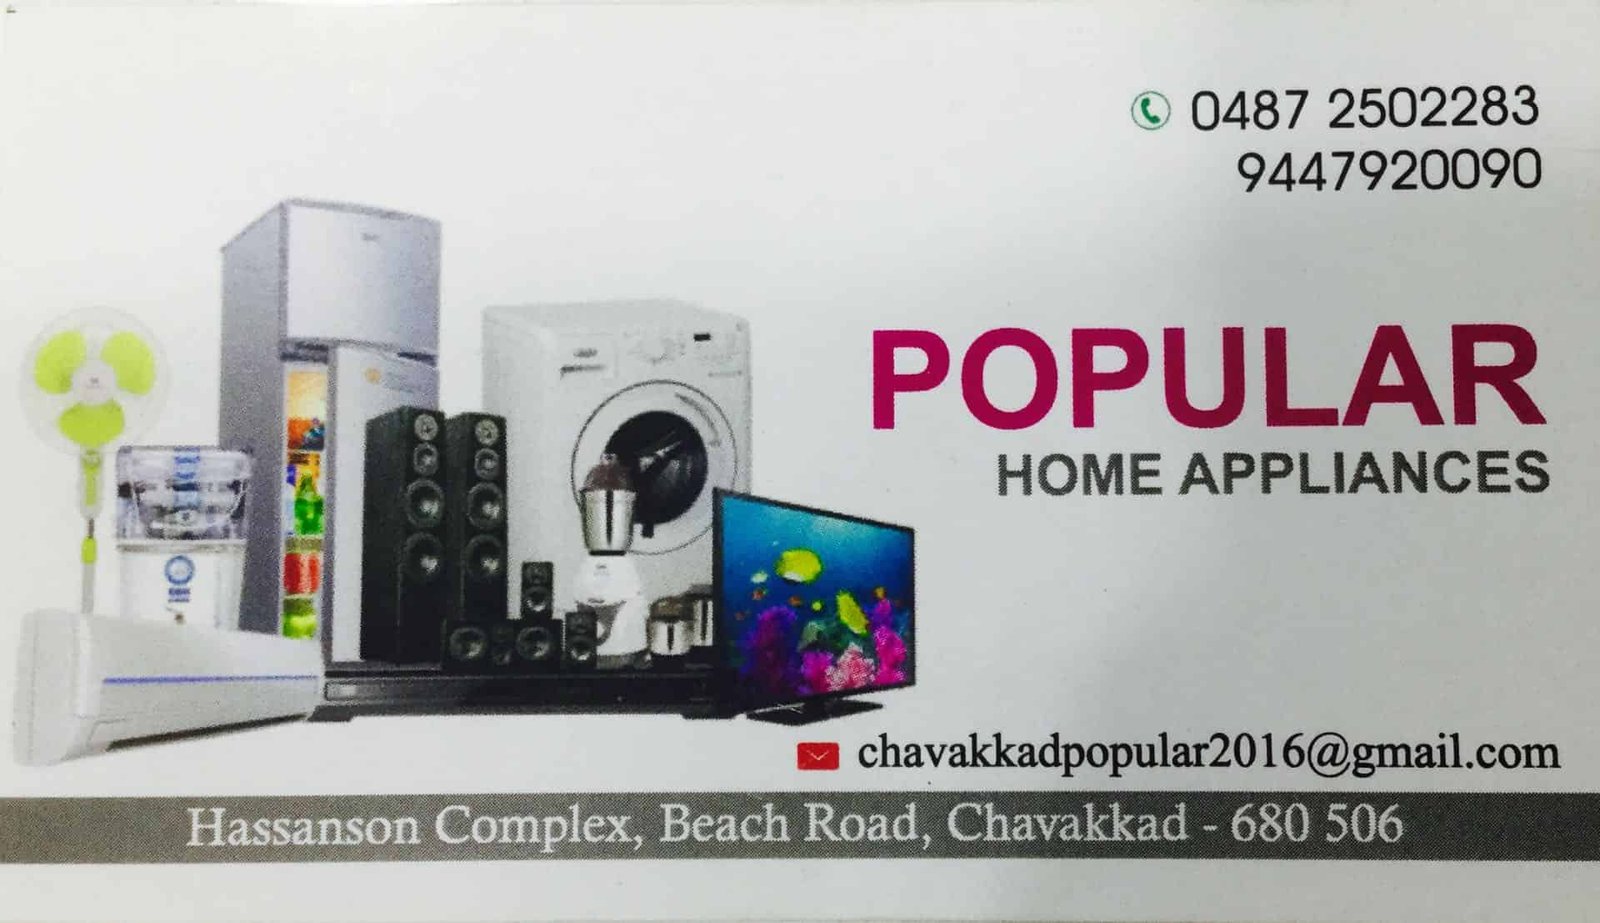 Popular Home Appliances